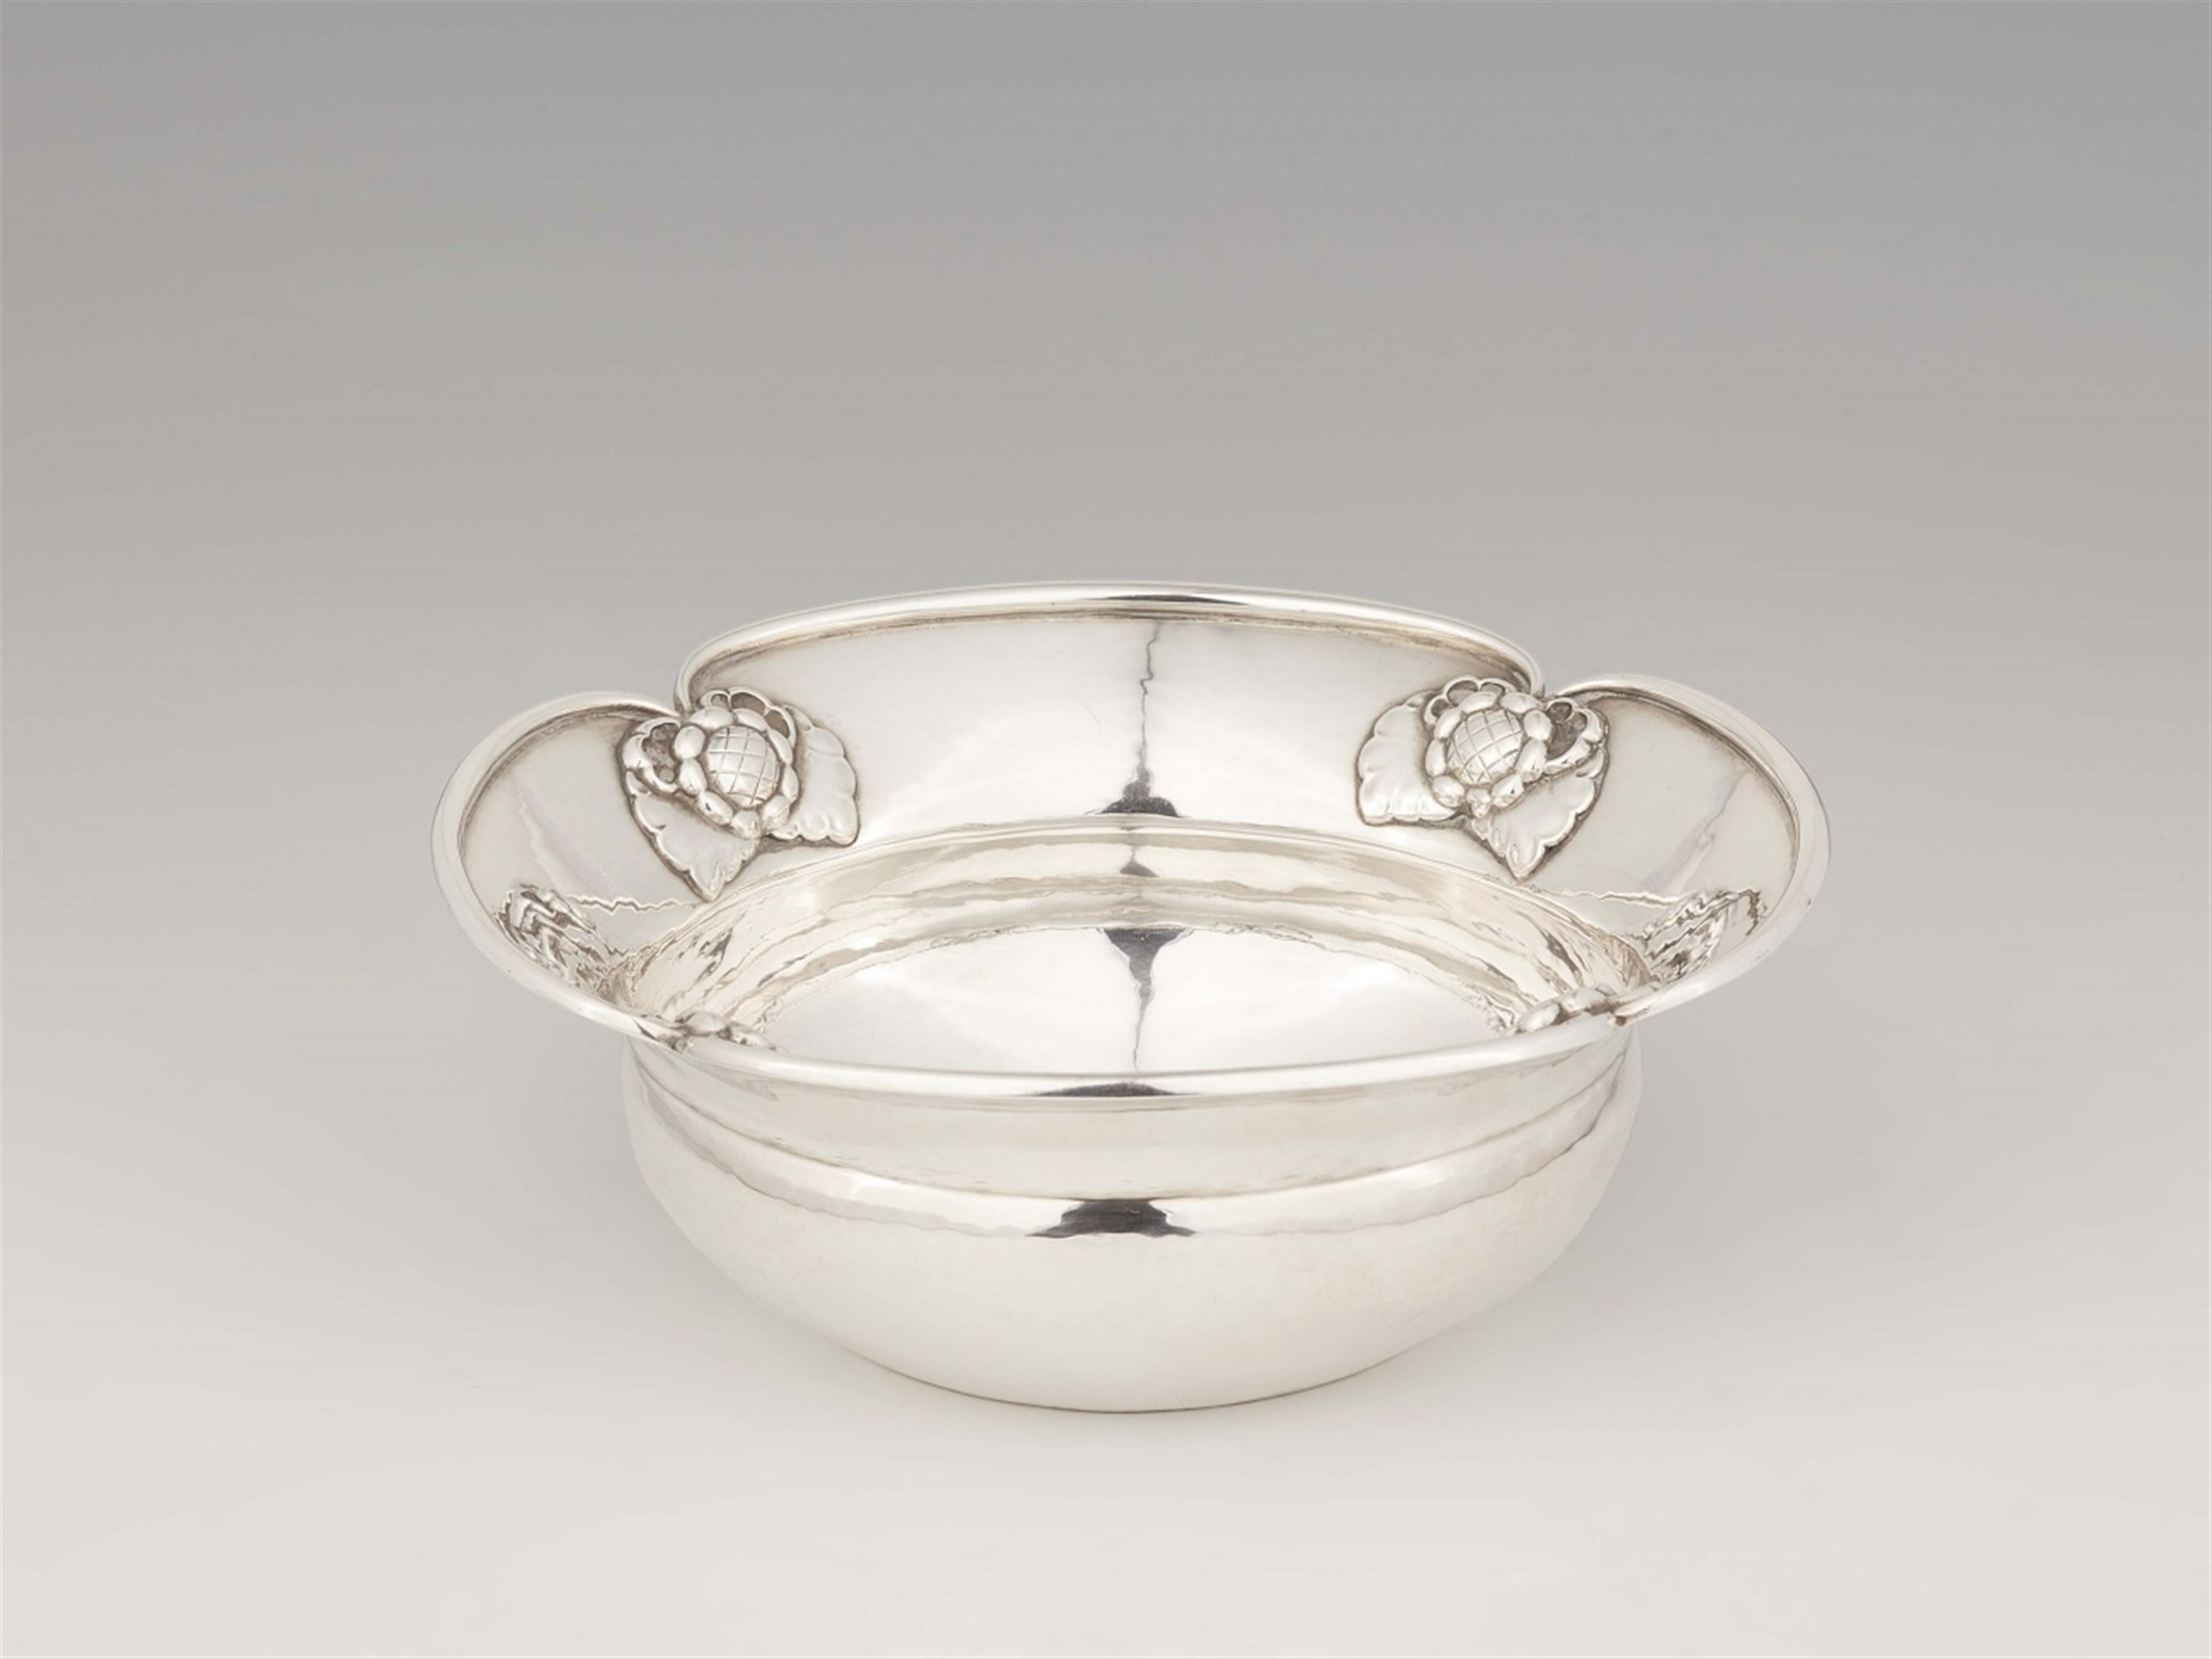 A Jugendstil Copenhagen silver dish by Georg Jensen, model no. 25